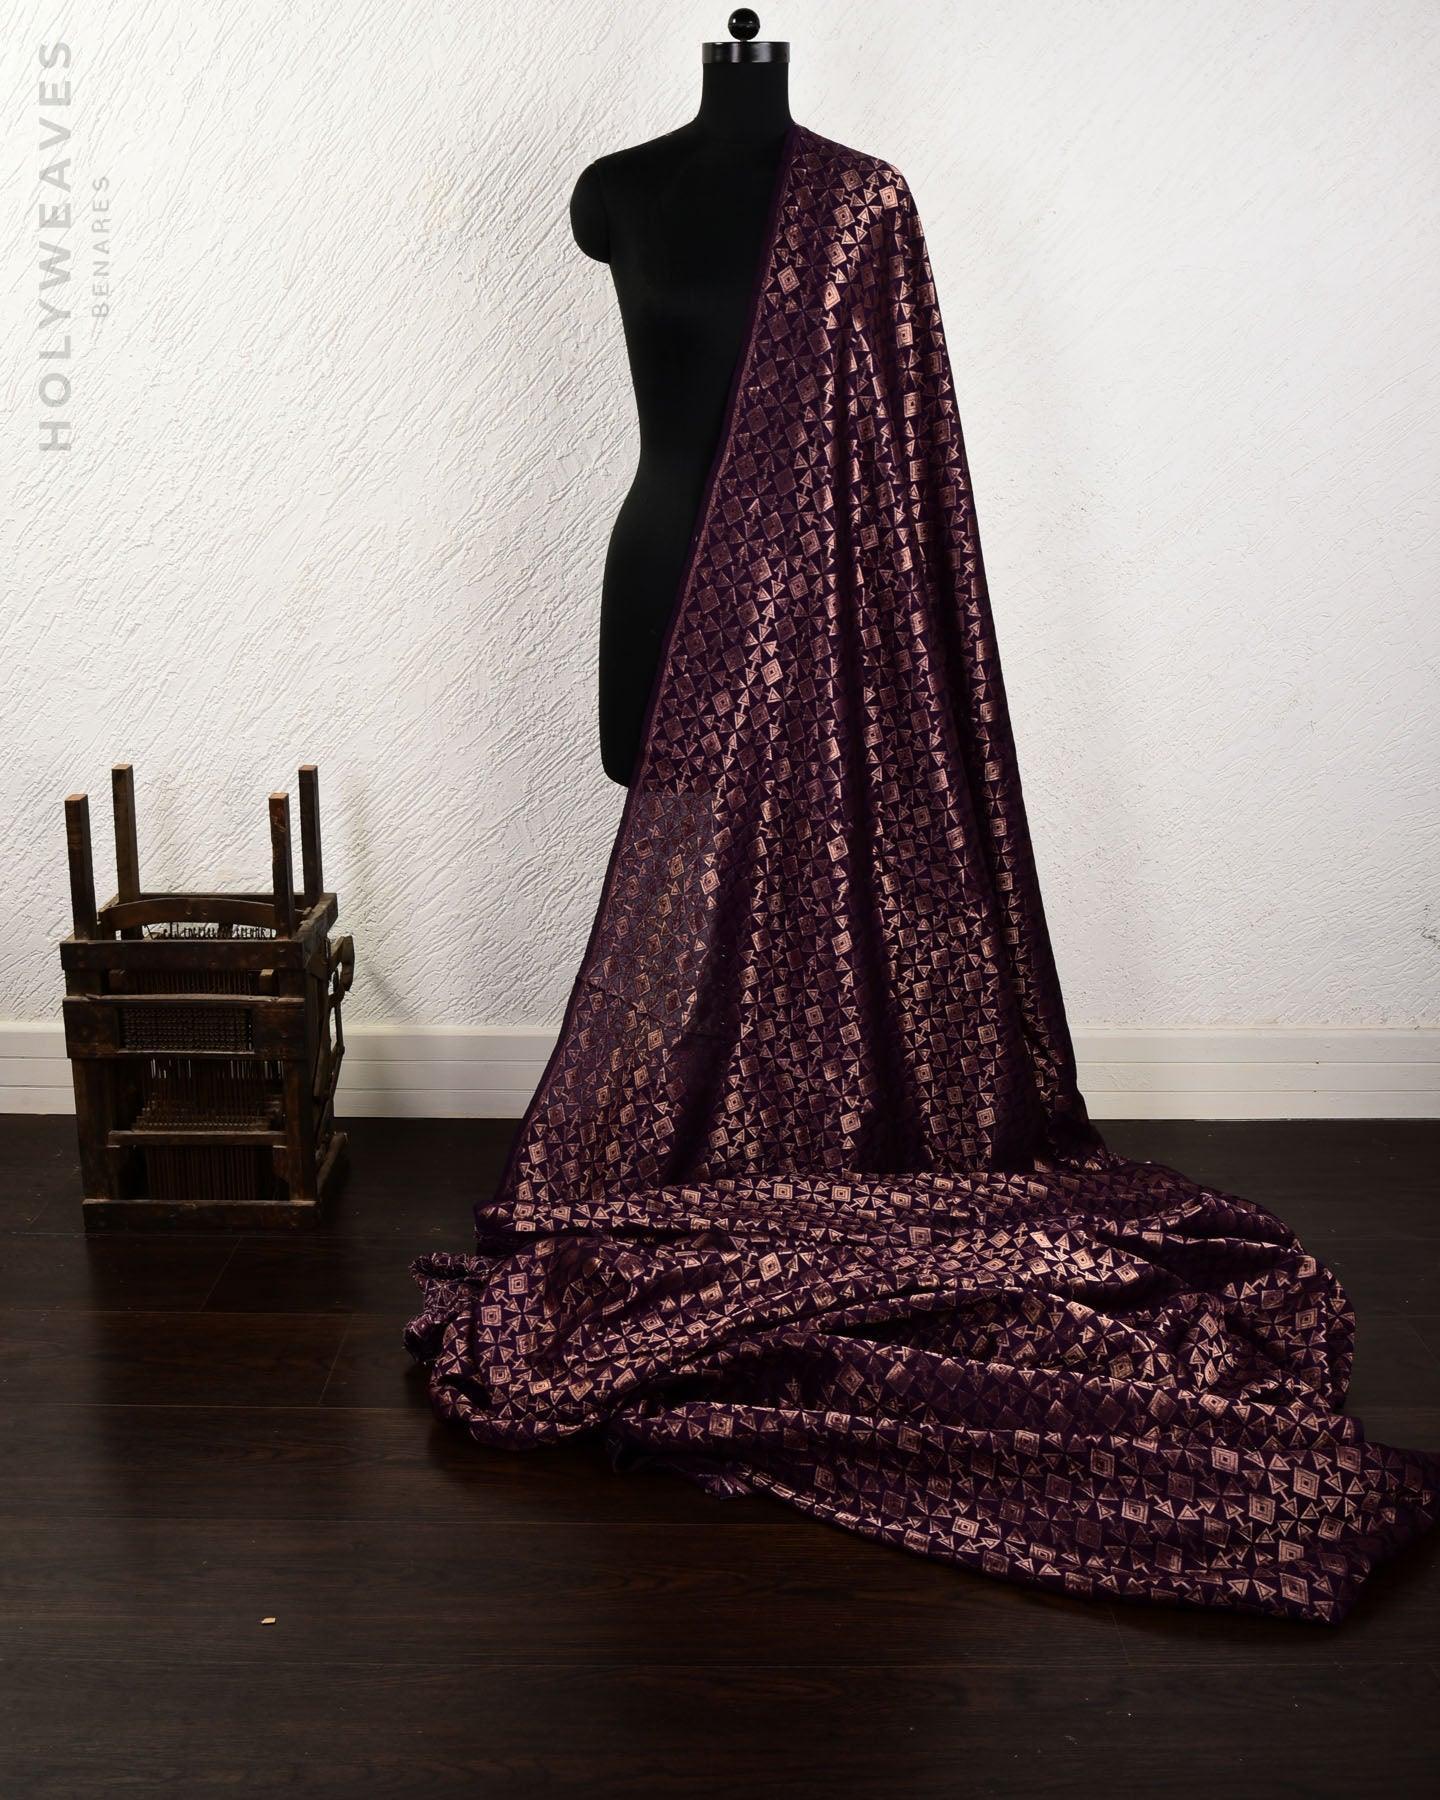 Dusty Purple Banarasi Geometric Cutwork Brocade Woven Cotton Silk Fabric - By HolyWeaves, Benares